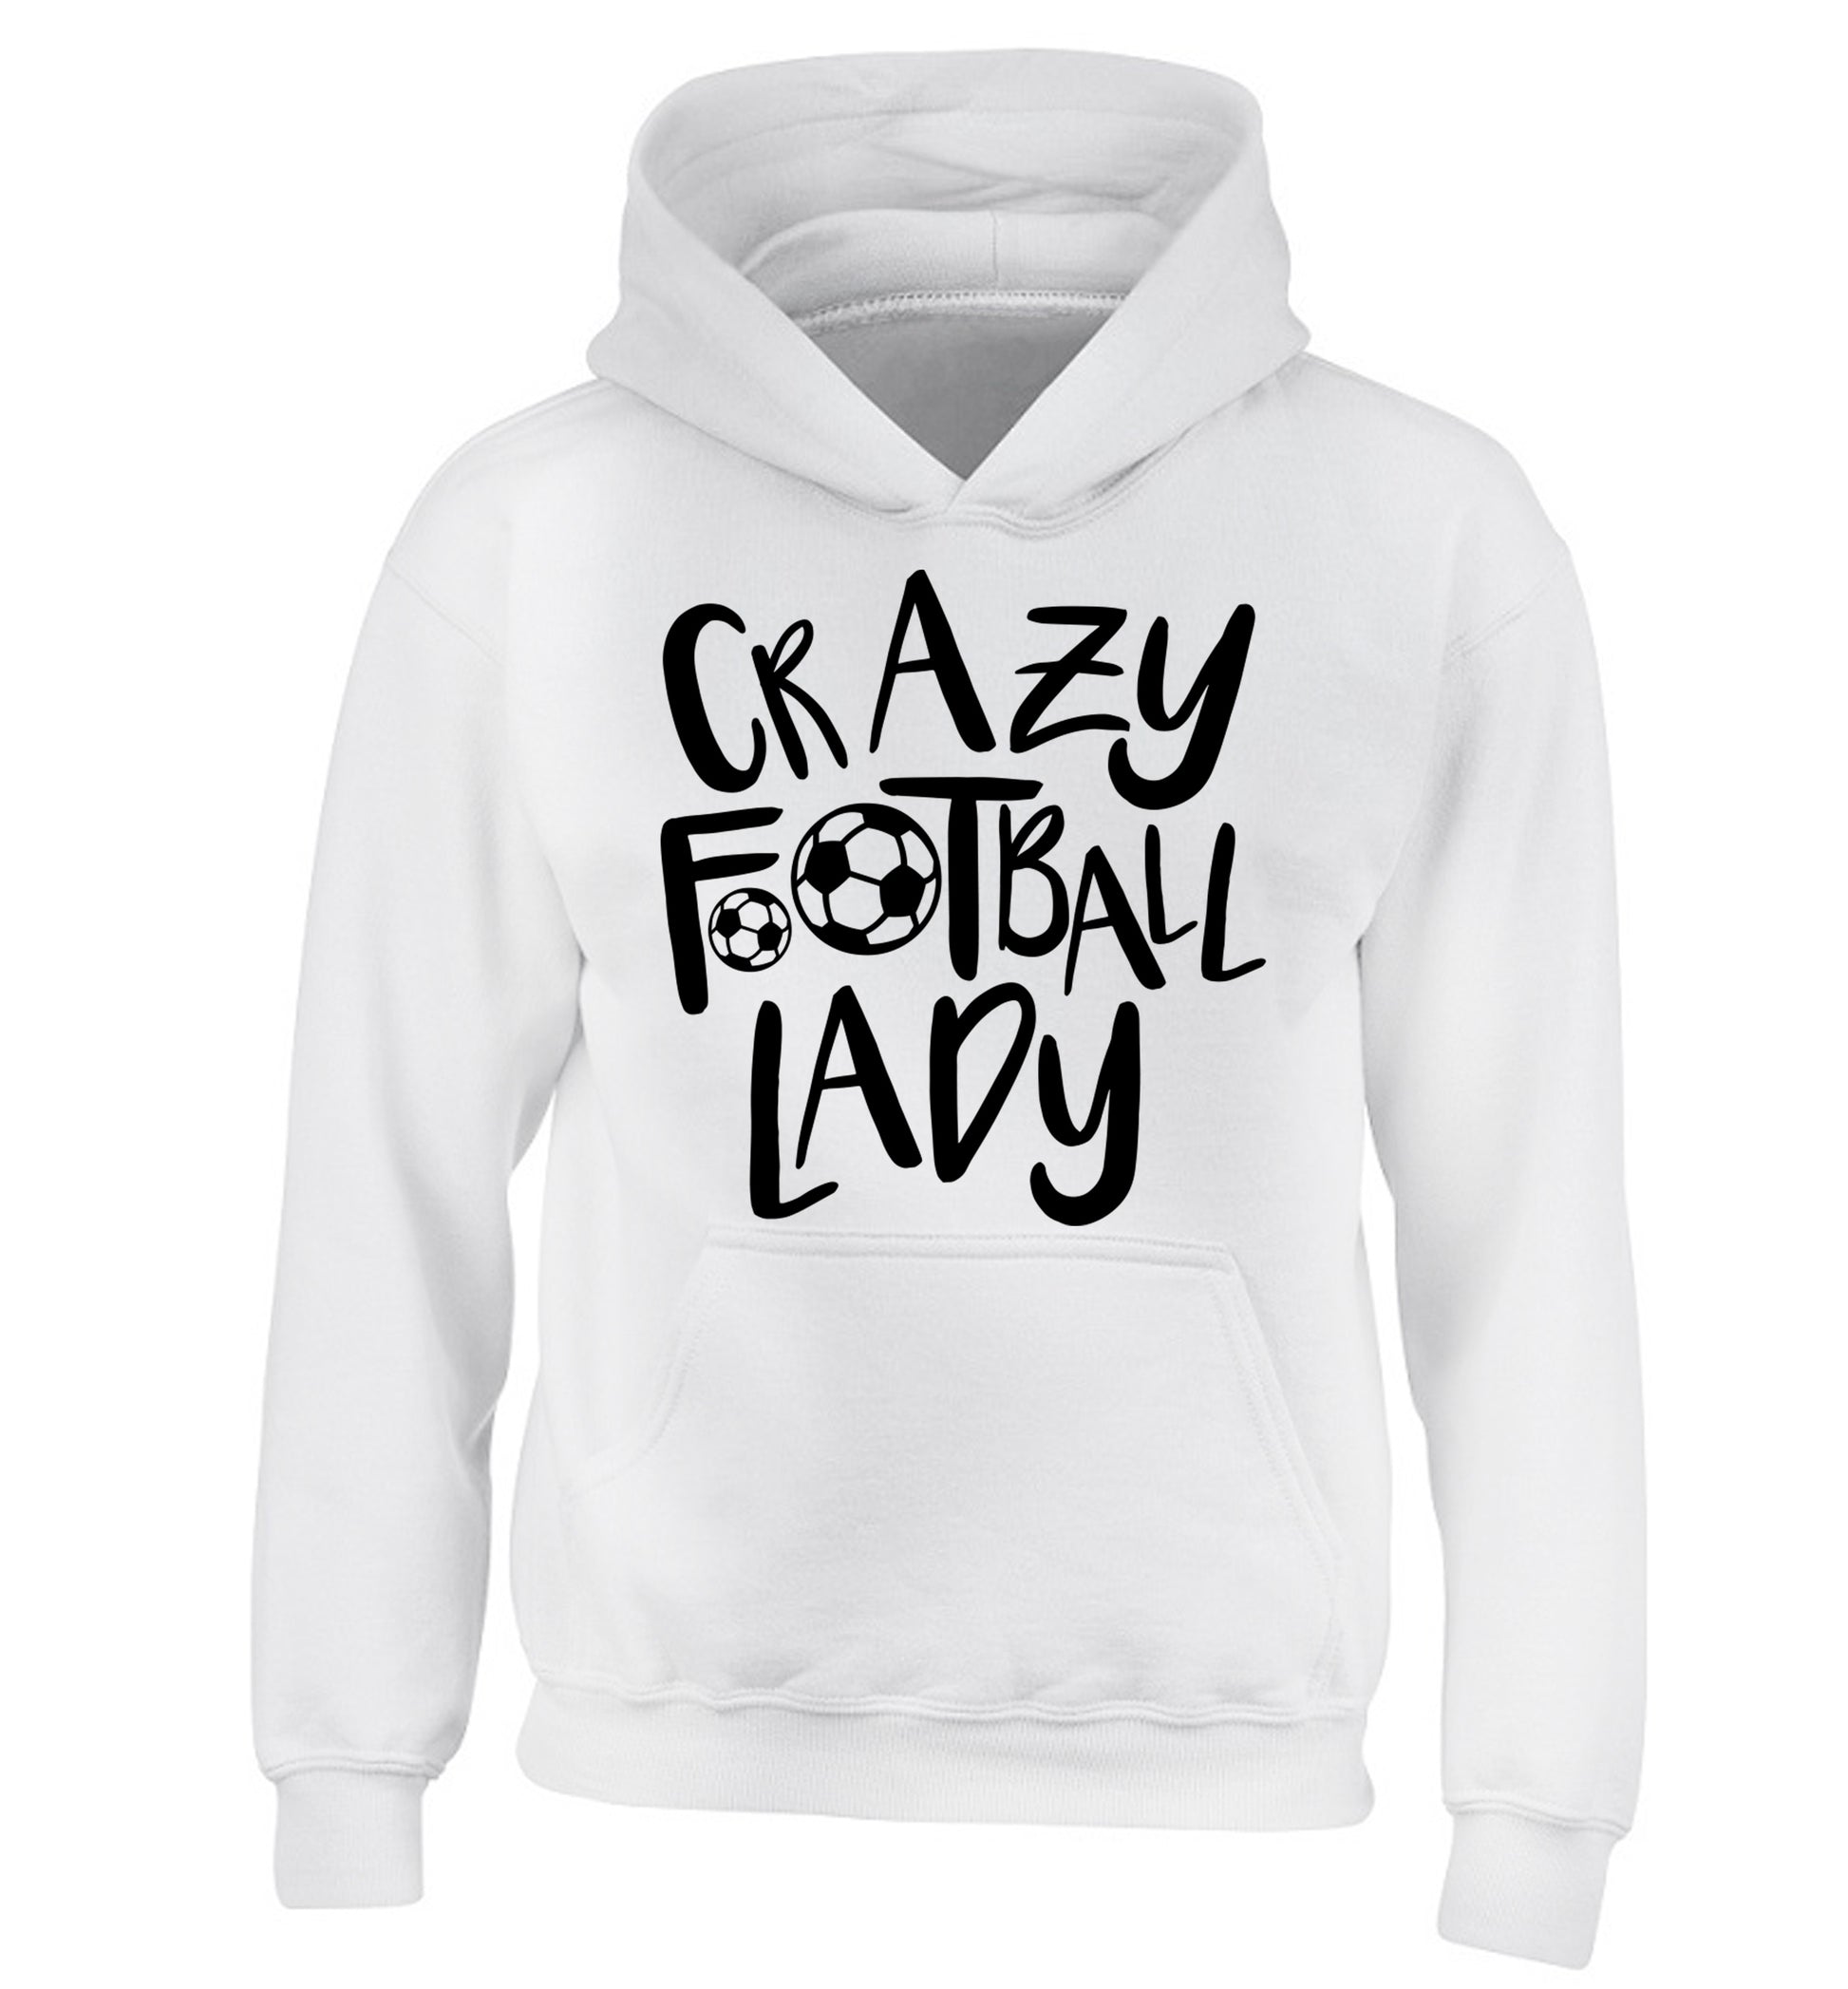 Crazy football lady children's white hoodie 12-14 Years